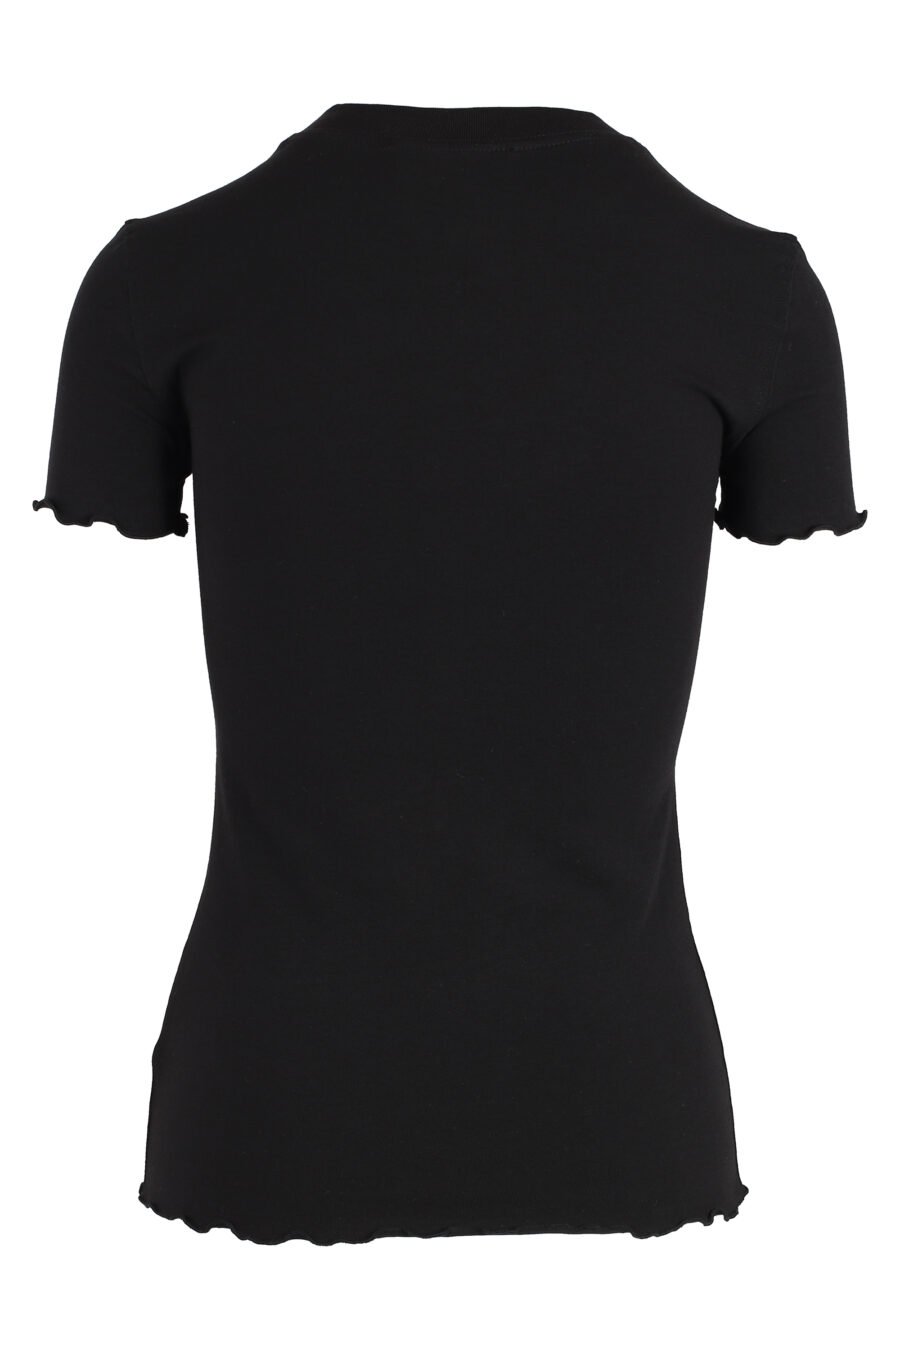 T-shirt preta com logótipo branco estilo pincel - IMG 4878